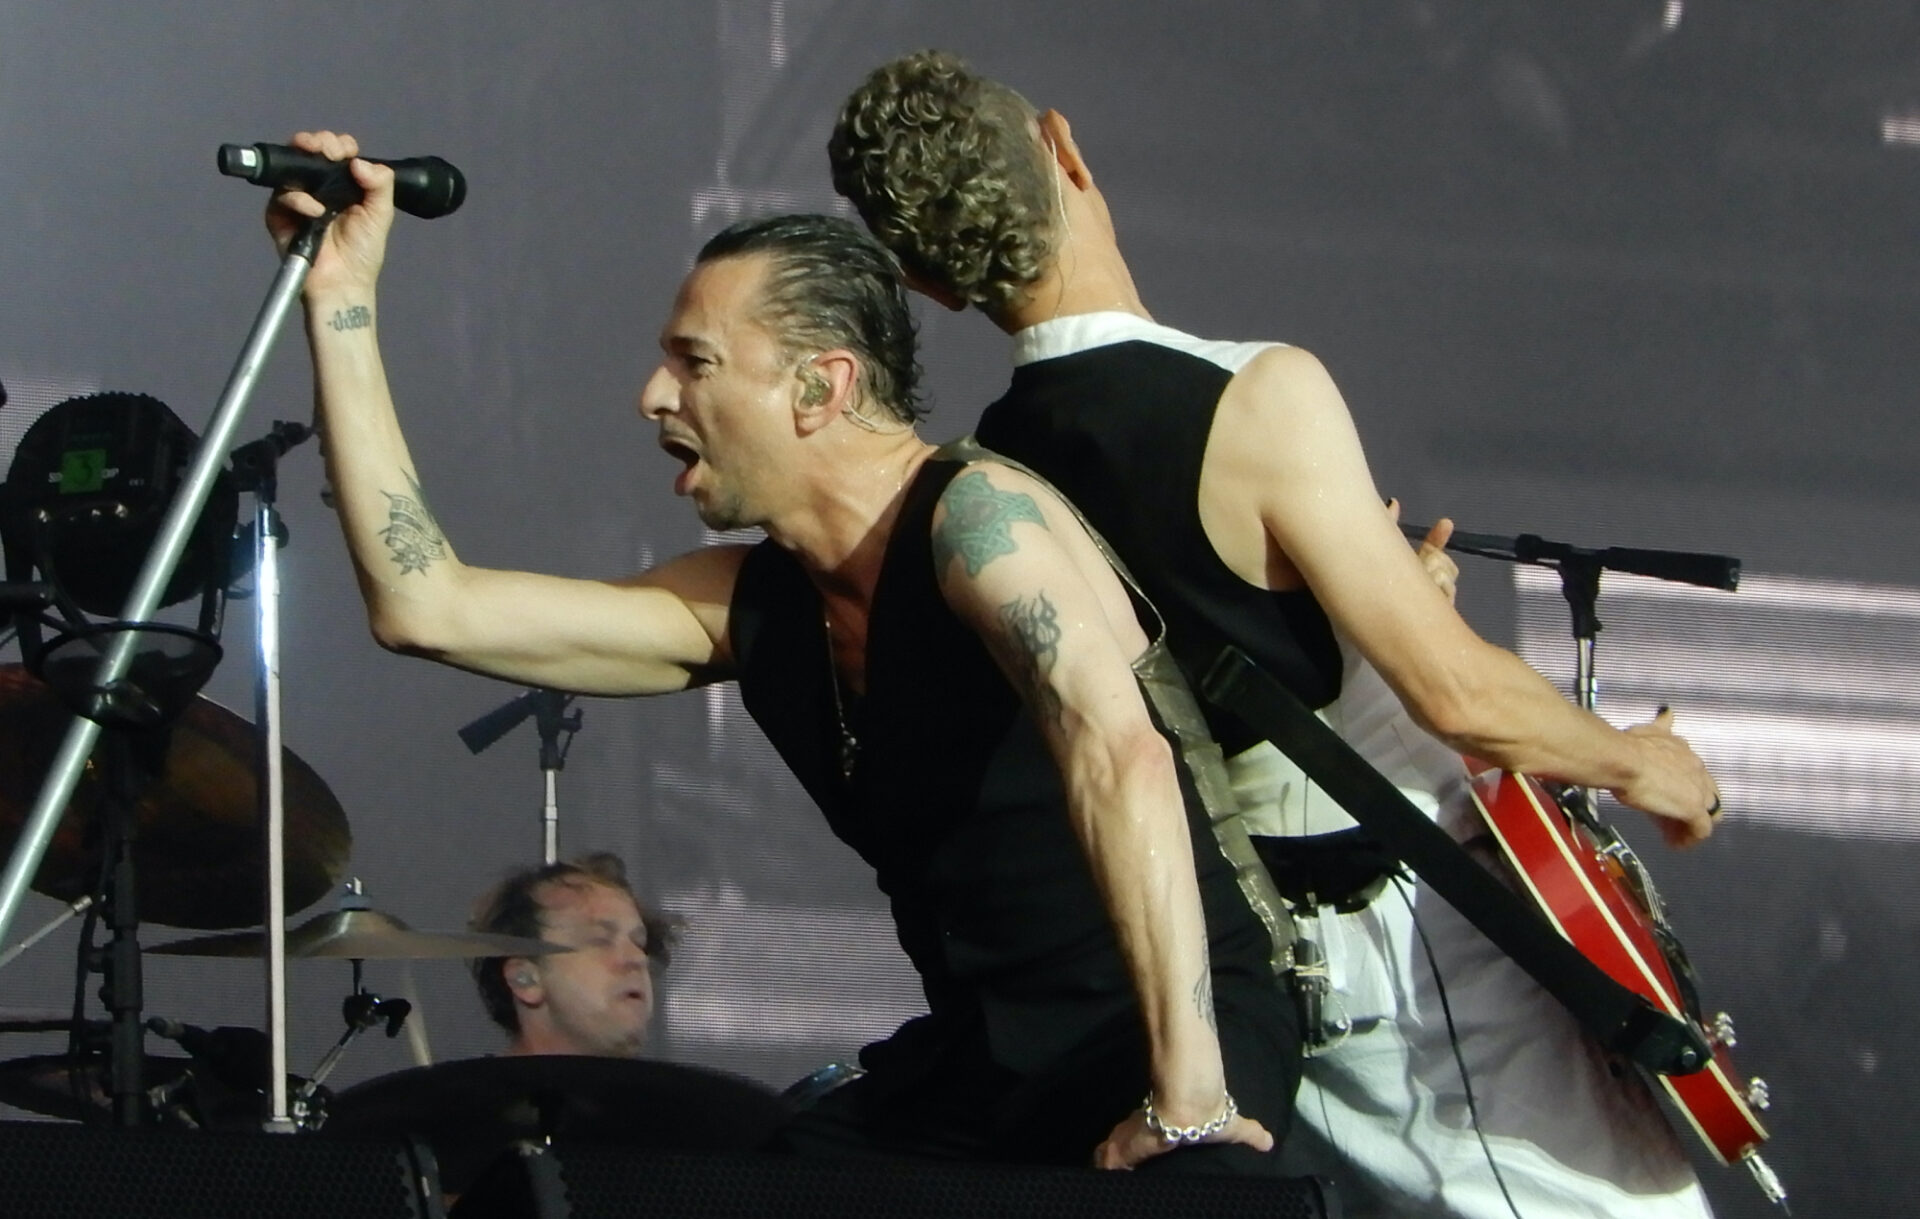 Depeche Mode (@depechemode) • Instagram photos and videos